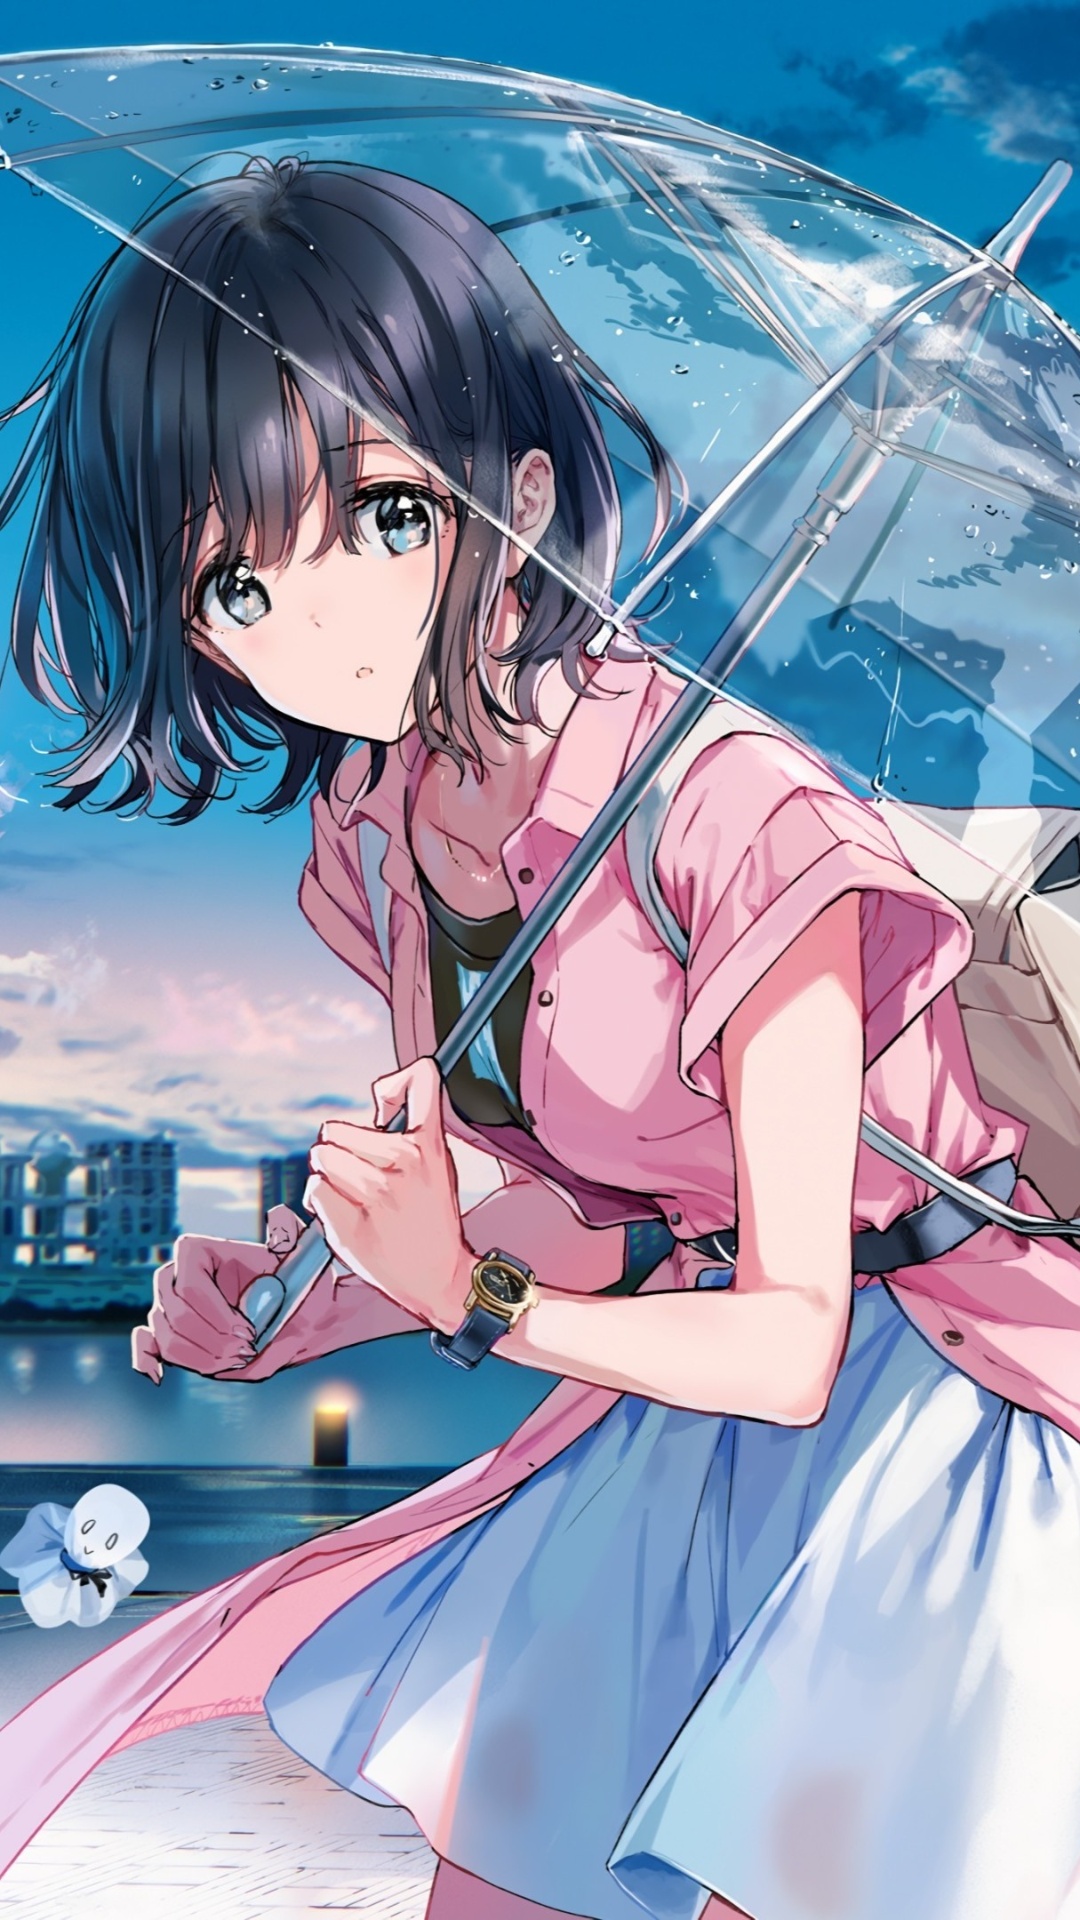 Anime Girl With Umbrella iPhone Wallpaper